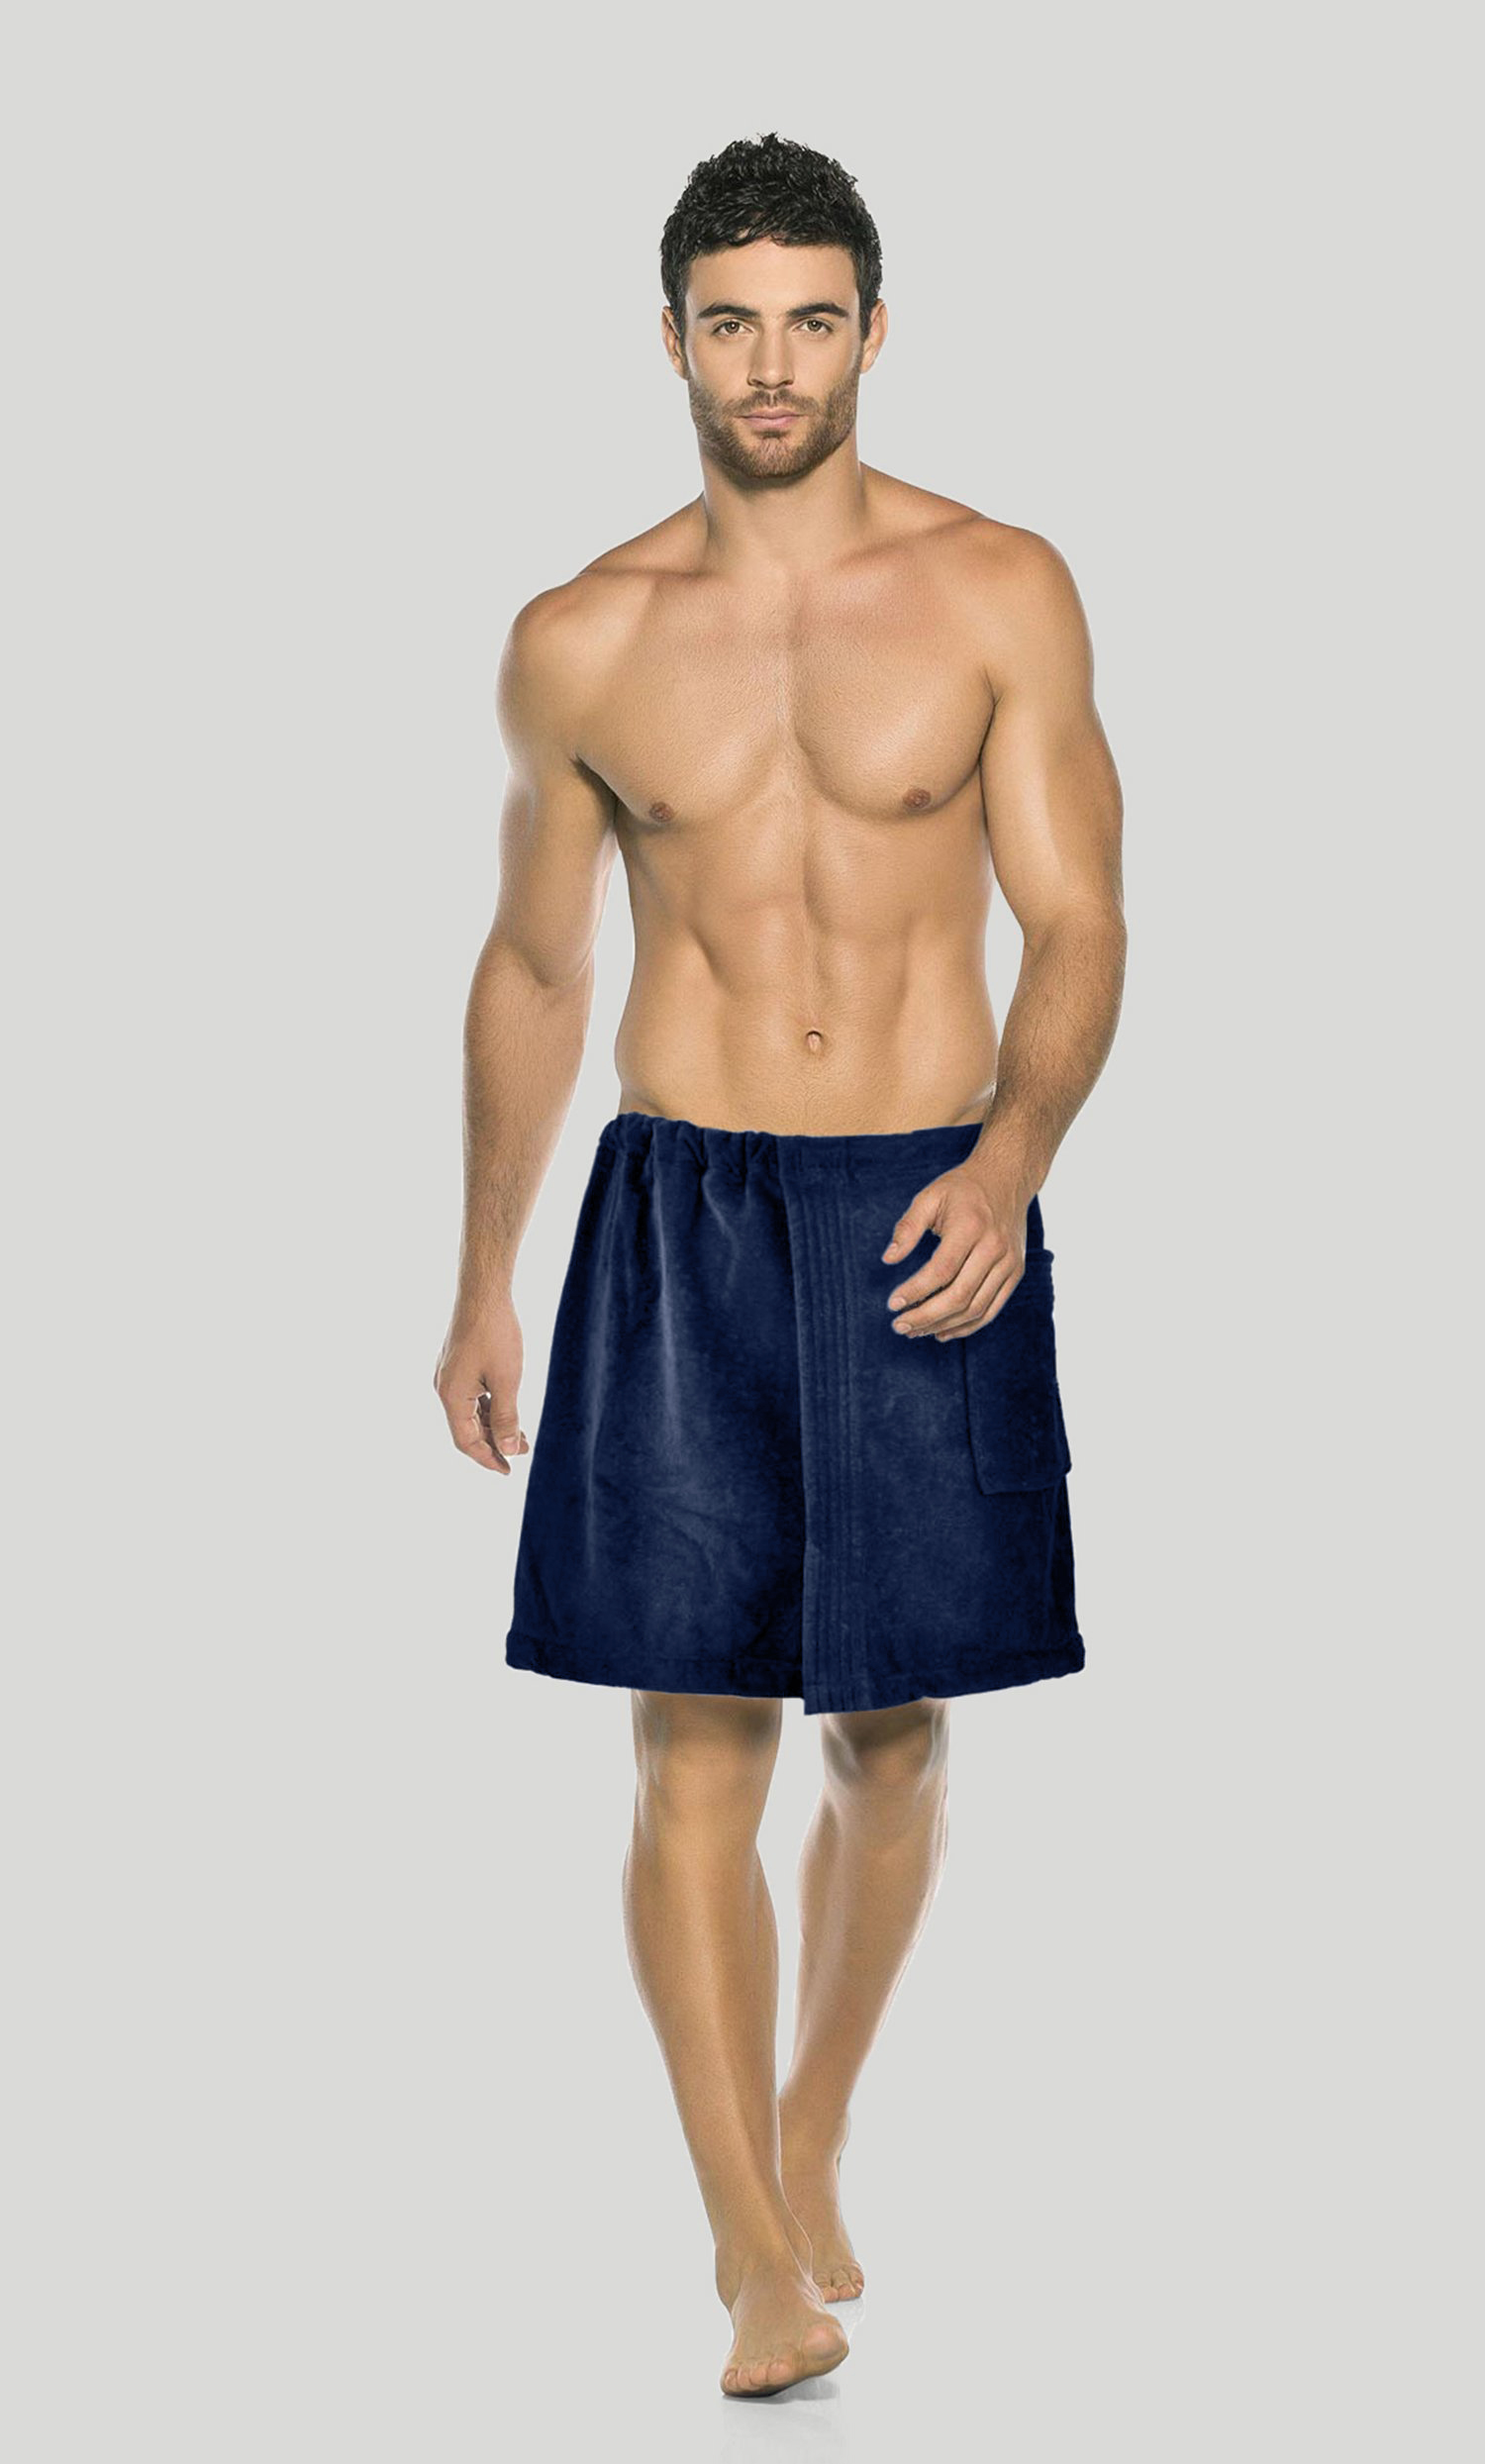 https://turquazlinen.com/images/detailed/2/turkish-cotton-men-body-spa-wrap-navy-blue-robemart.jpg